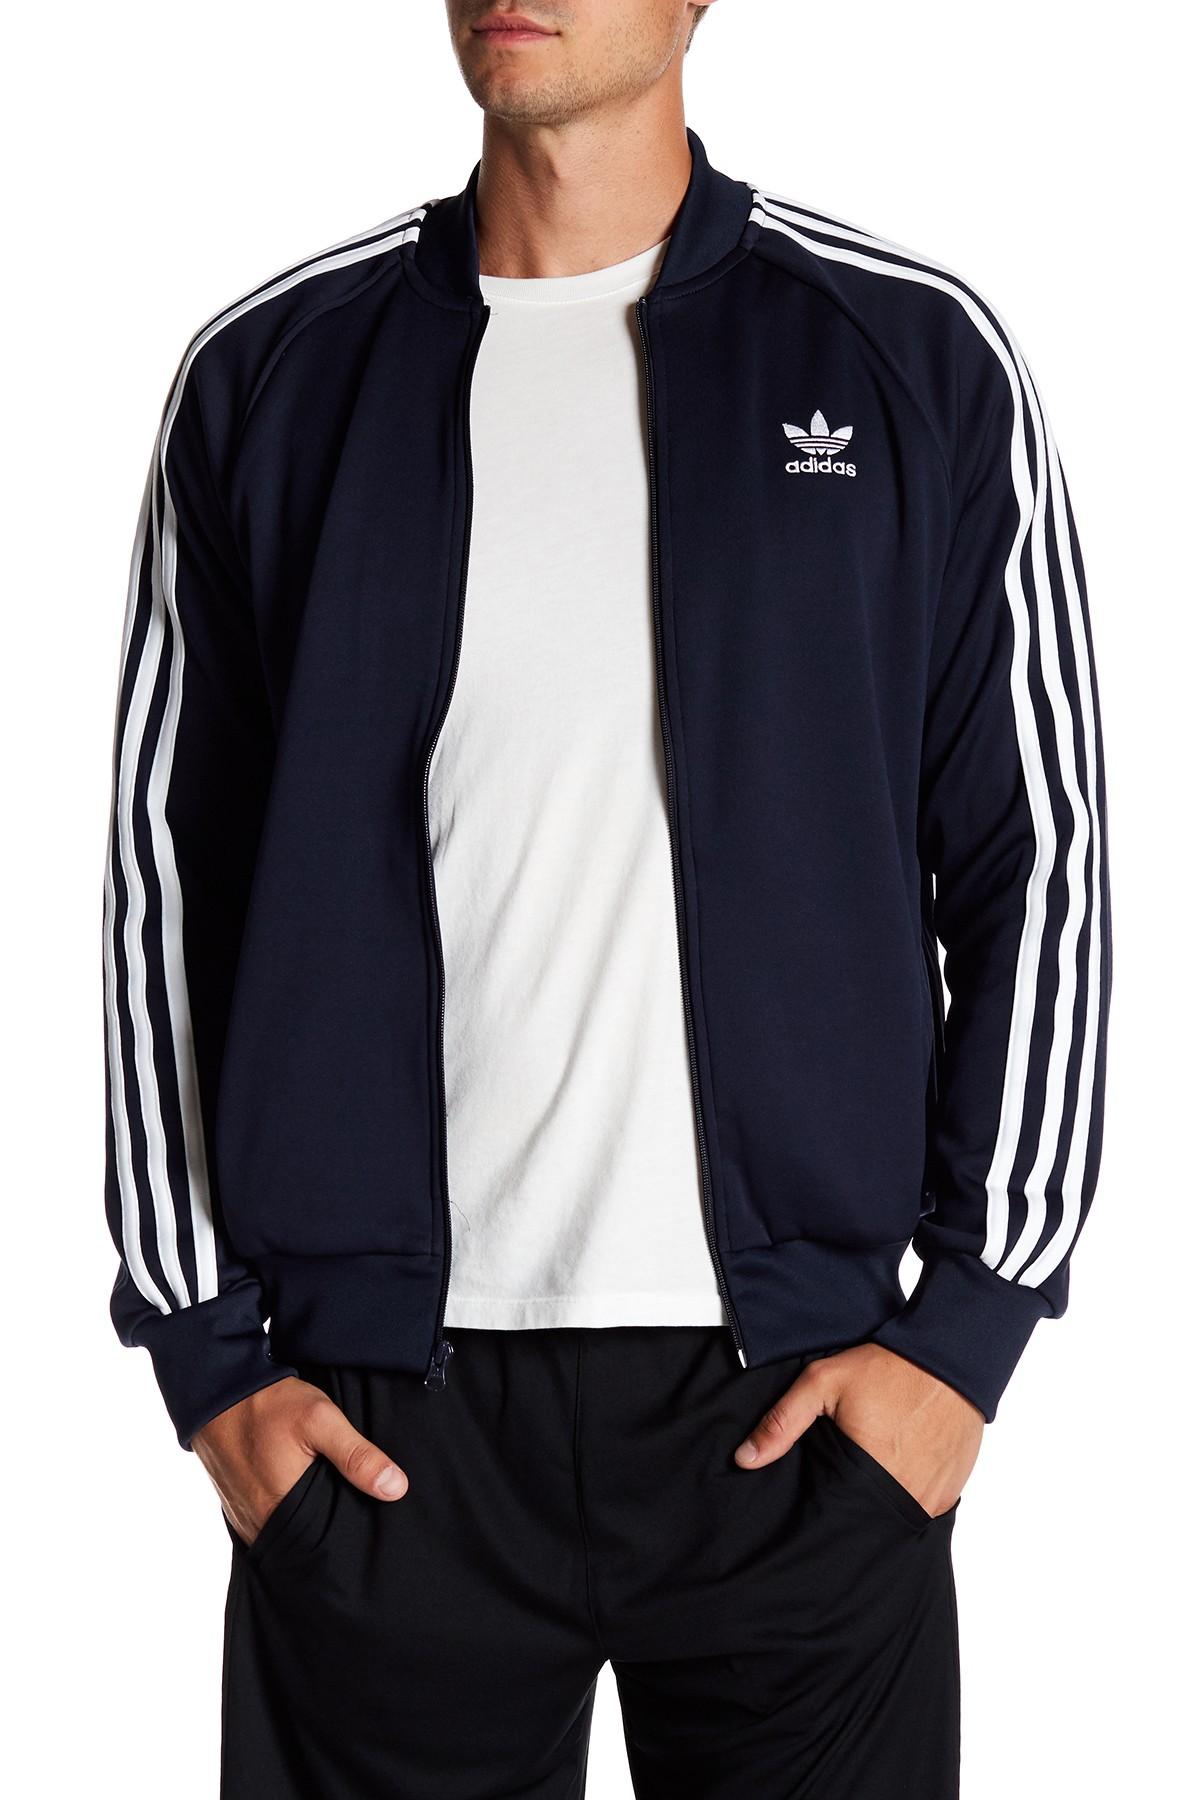 Lyst - Adidas Originals Shoulder Stripe Zip-up Jacket in Blue for Men